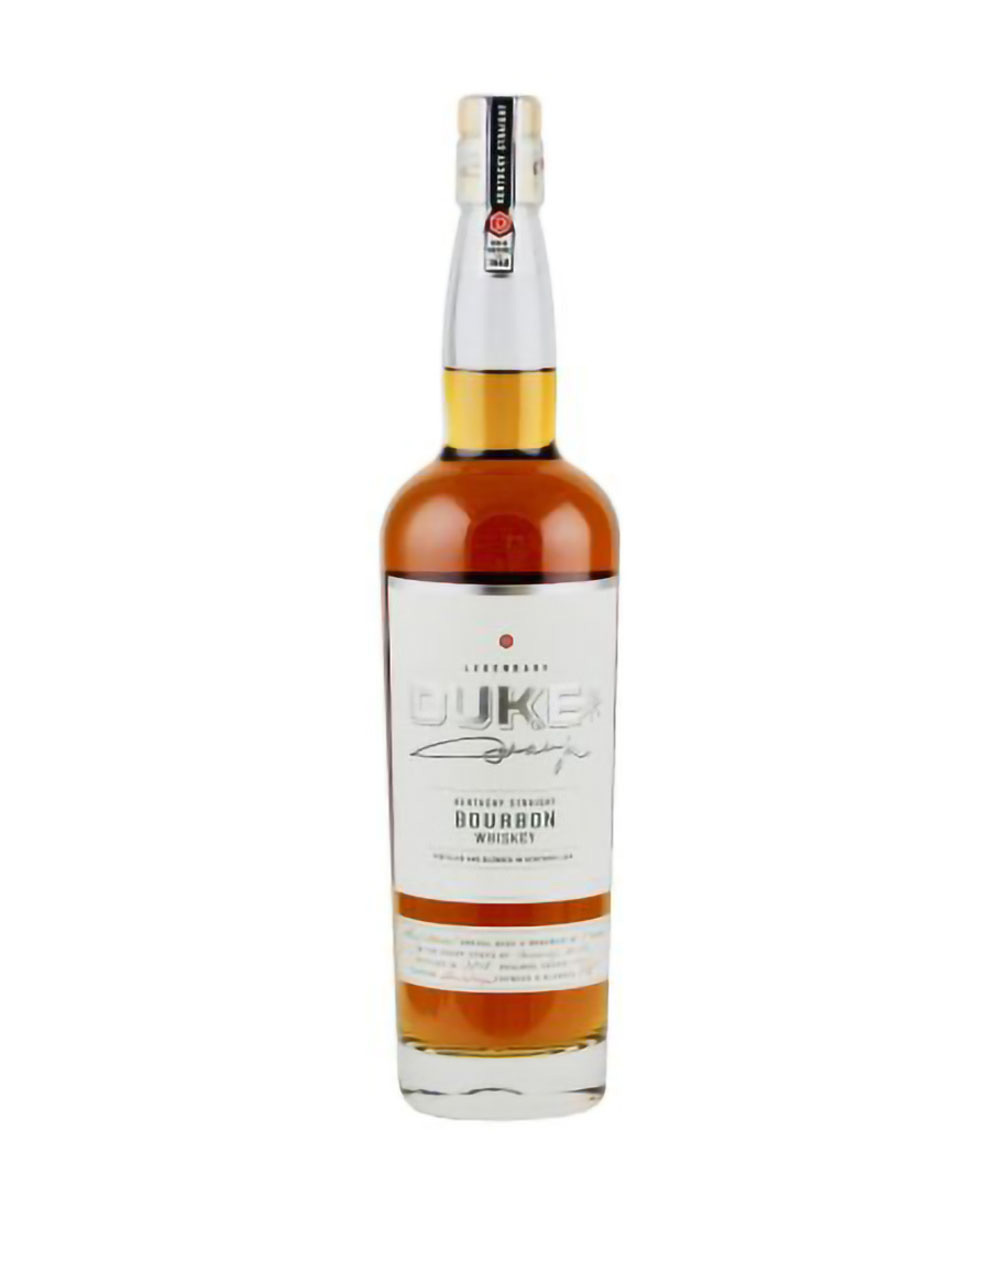 The Glenrothes Select Cask Reserve Scotch Whisky